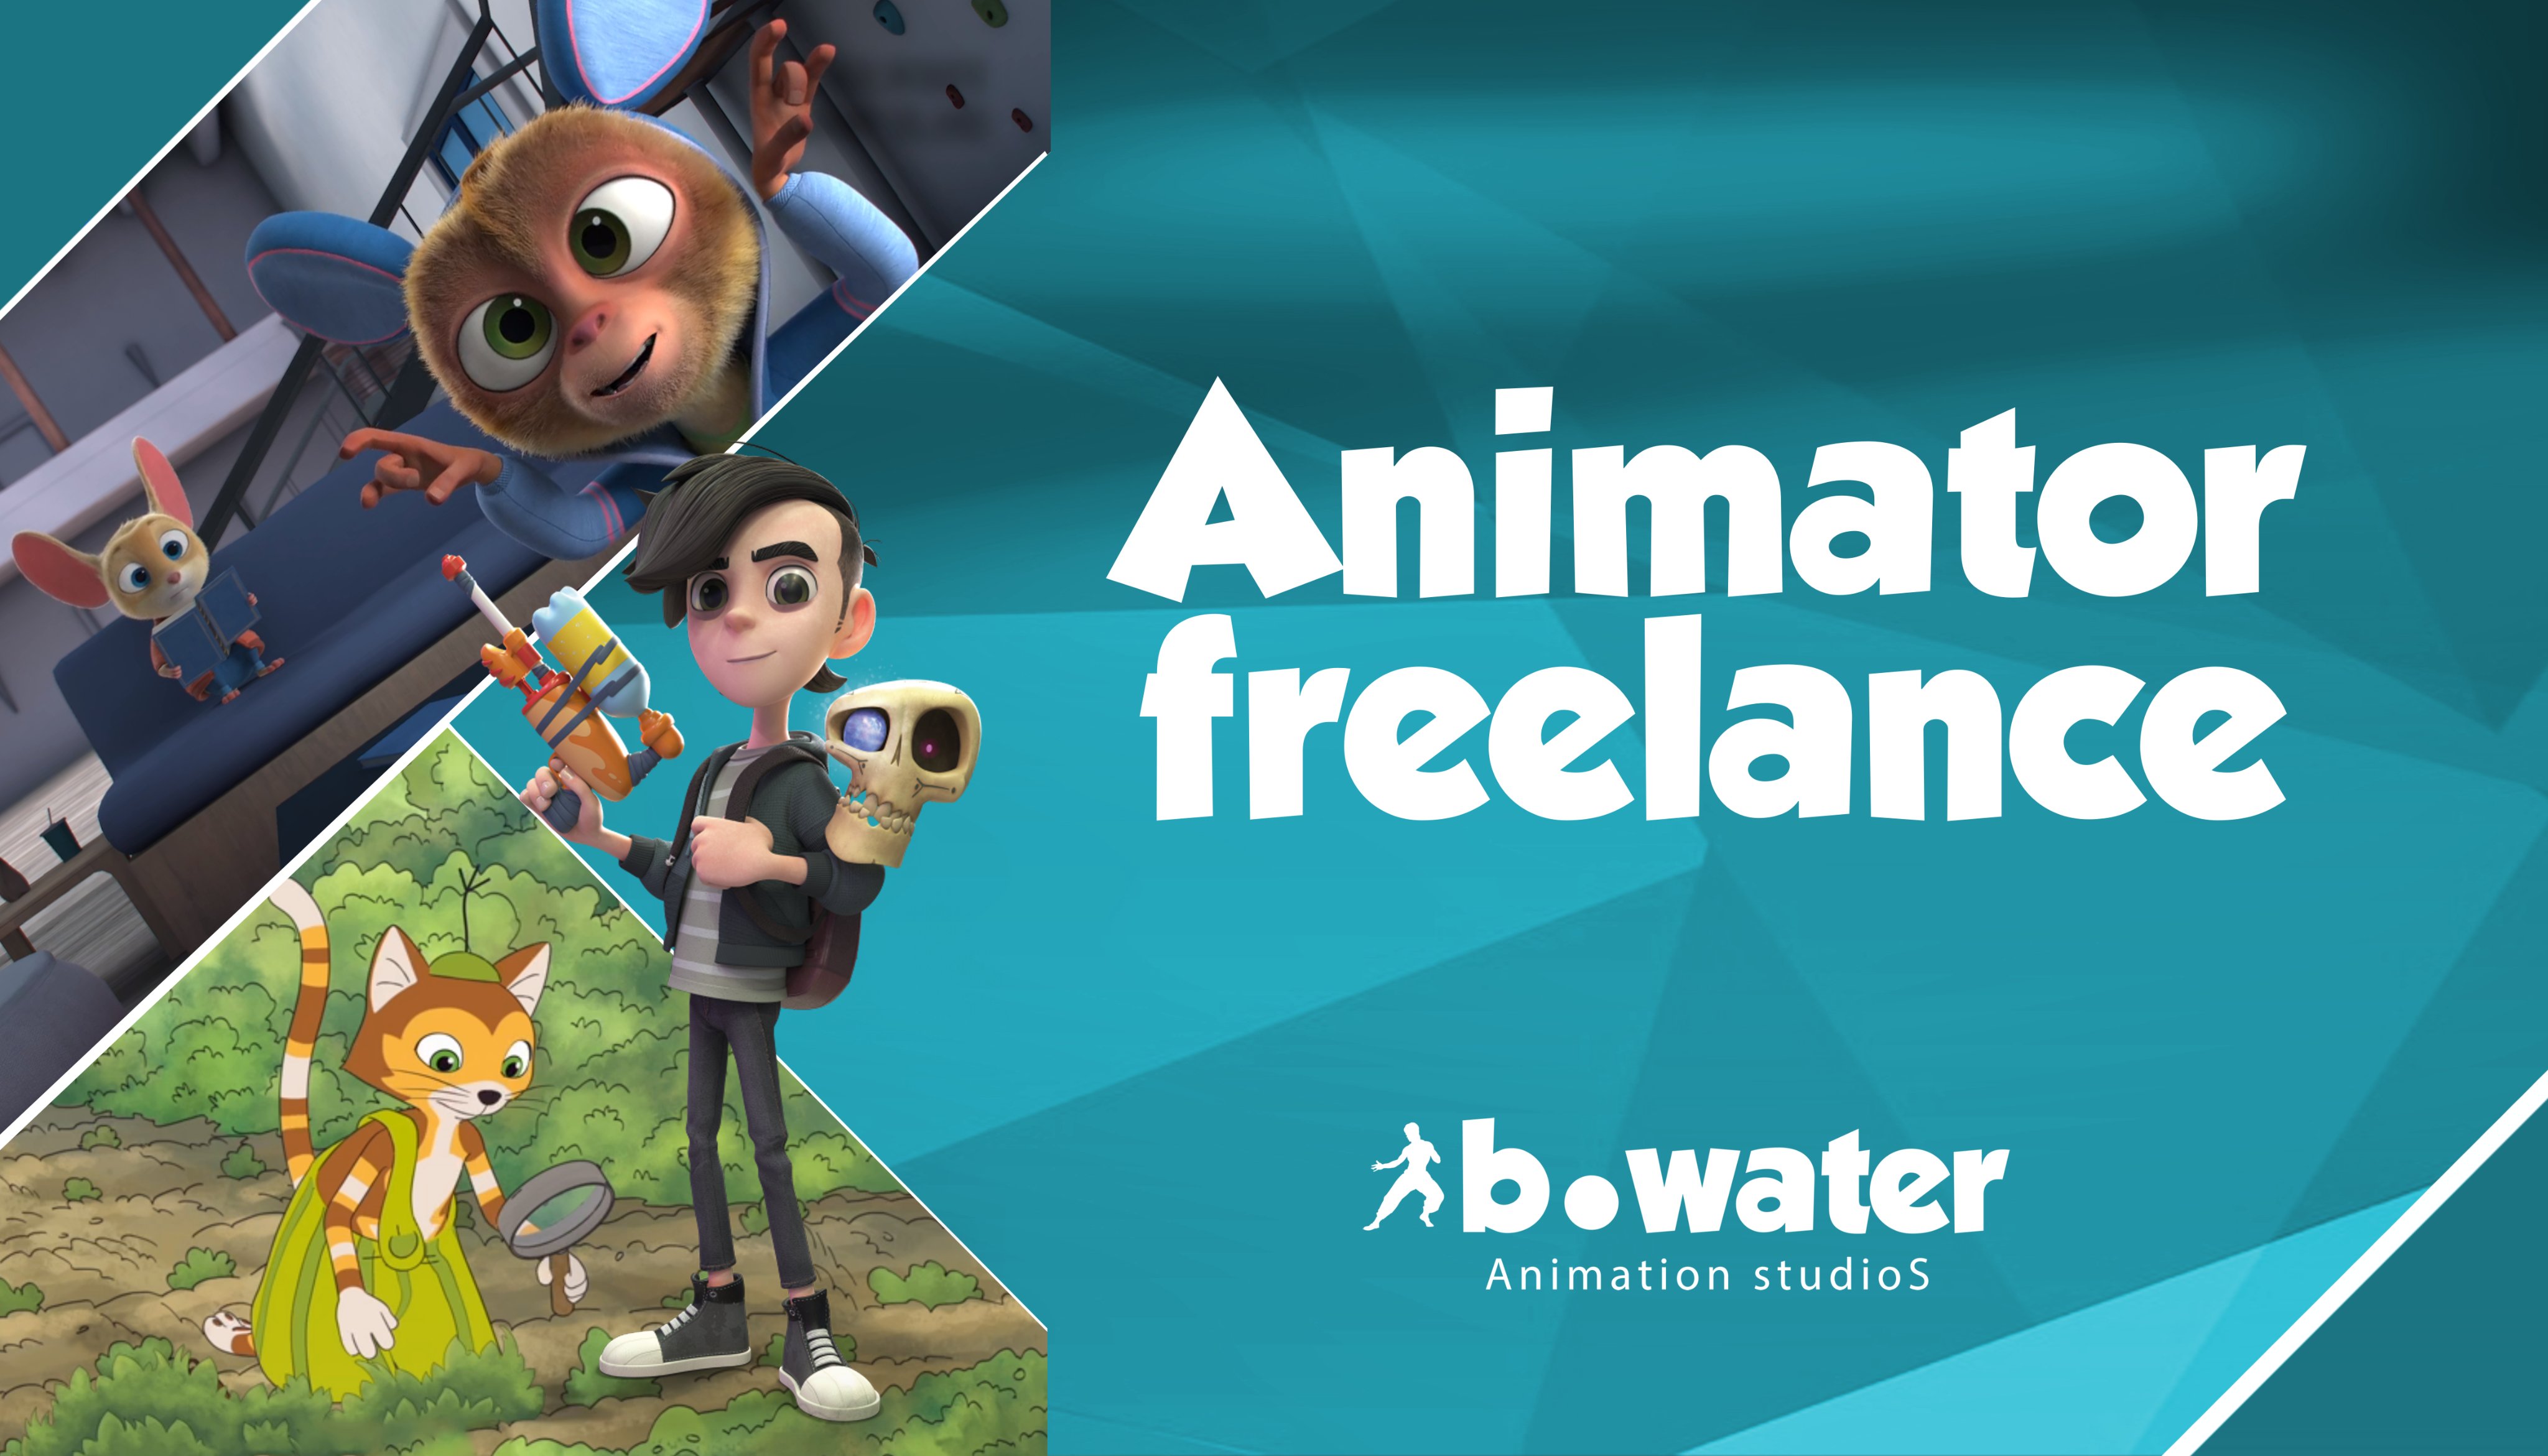 B-Water Animation Studios (@Bwater_Studios) / Twitter